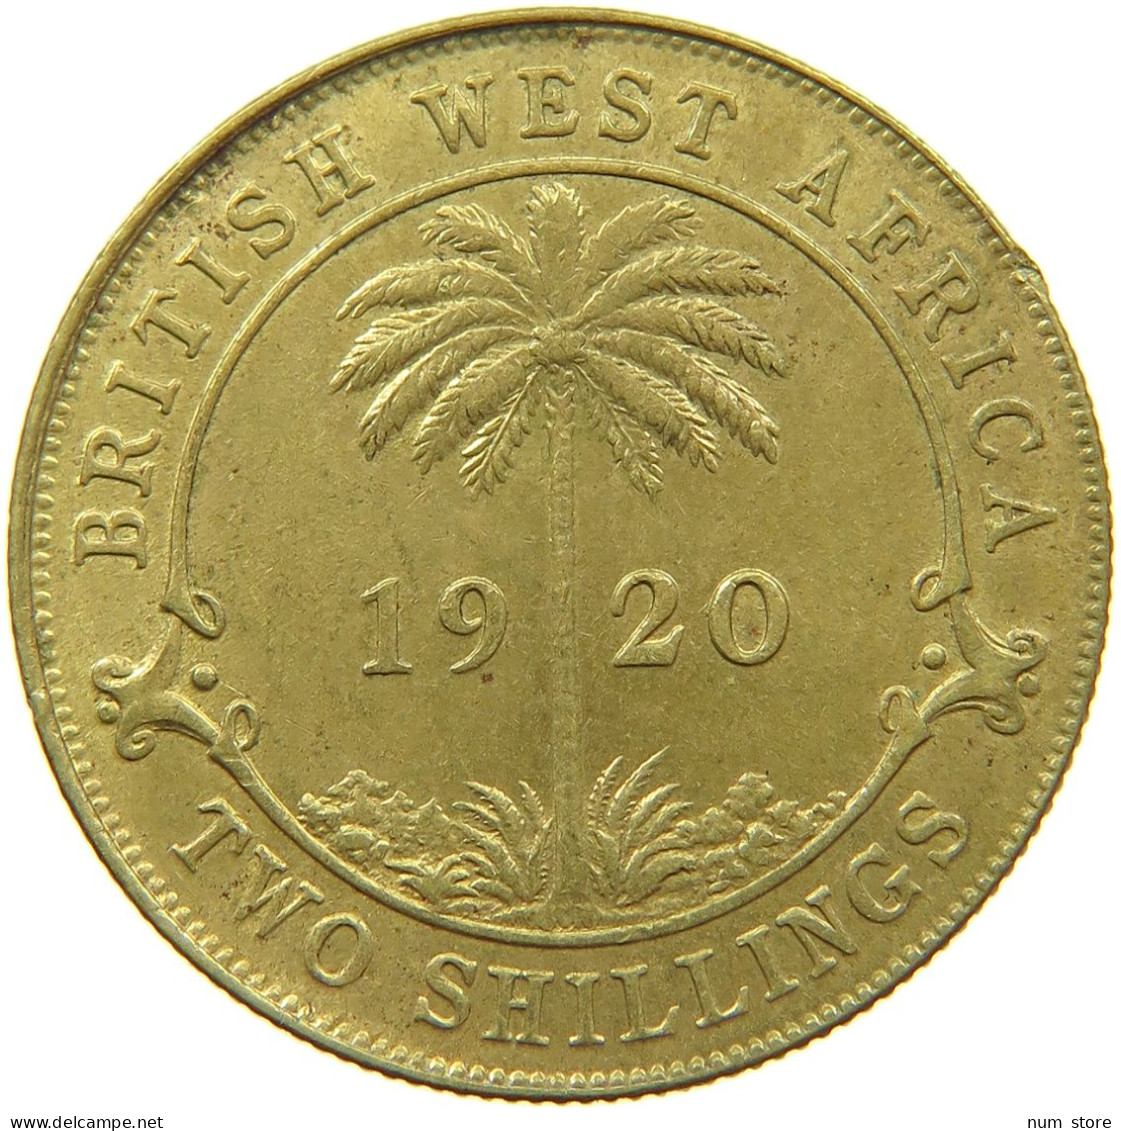 WEST AFRICA 2 SHILLING 1920 KN George V. (1910-1936) #t152 0007 - Colecciones